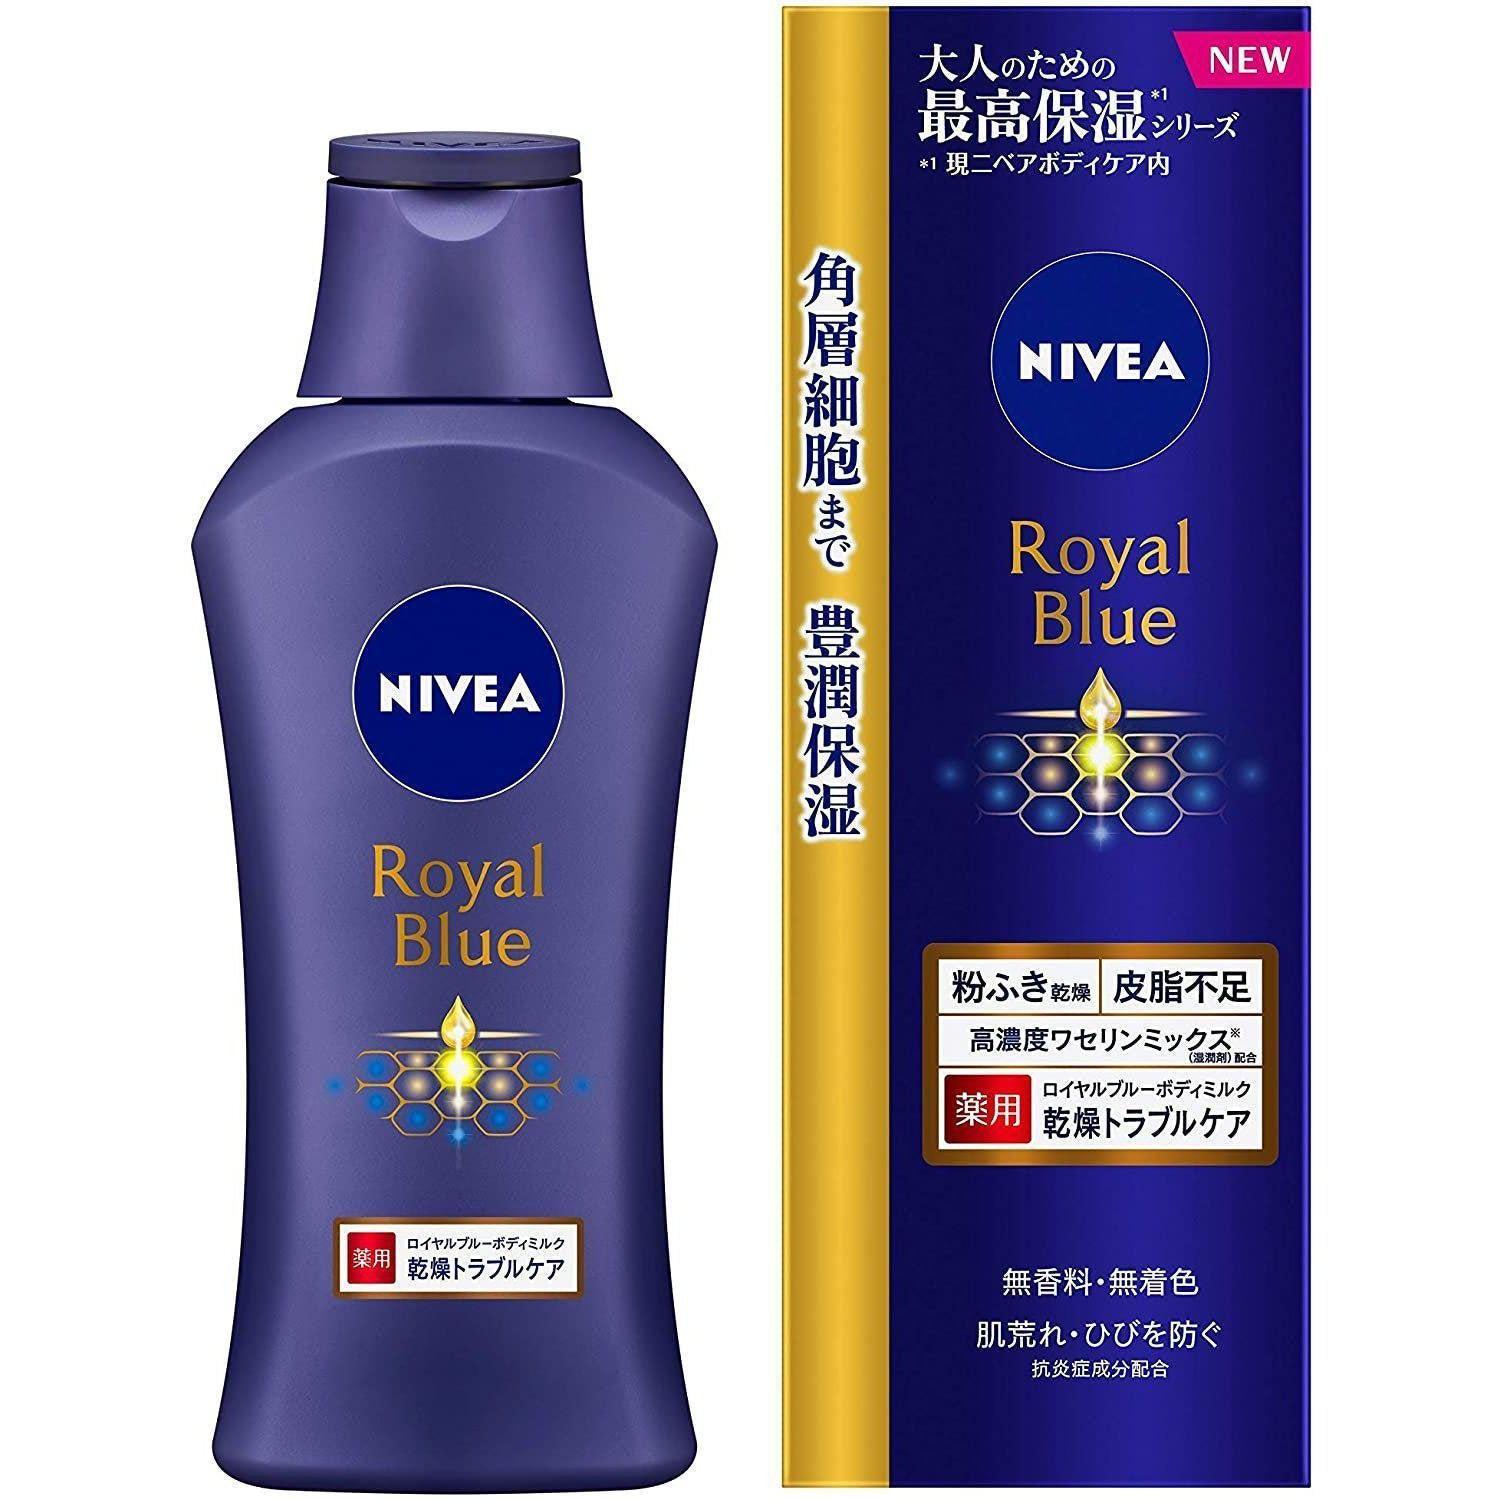 Nivea Japan Royal Blue Body Milk Trouble Care Milky Lotion 200g